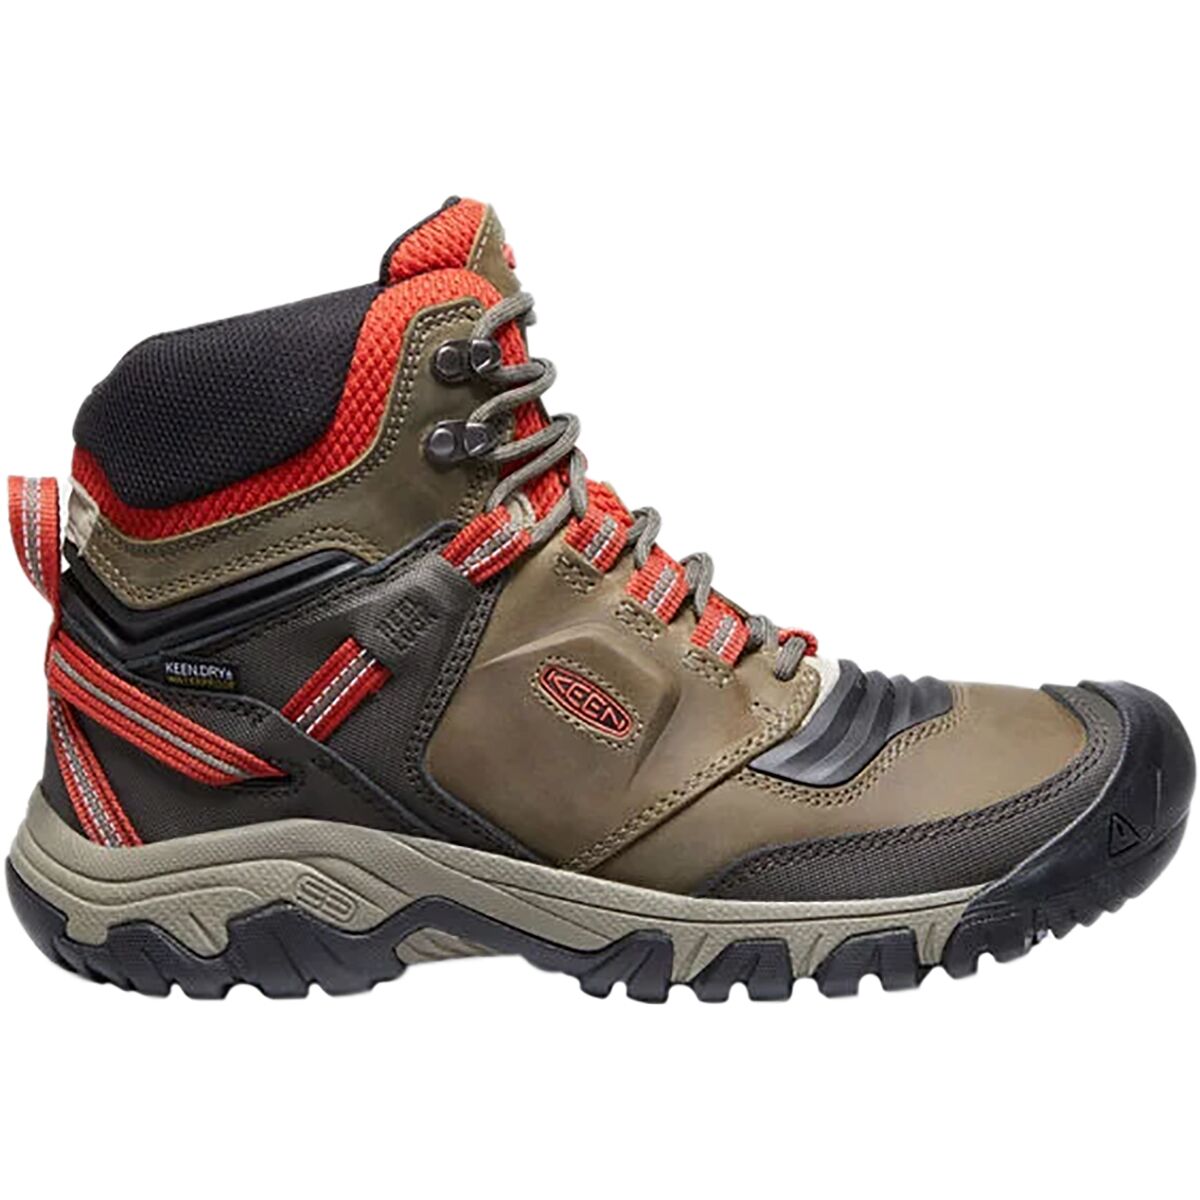 KEEN Ridge Flex Mid WP Wide Hiking Boot - Men's